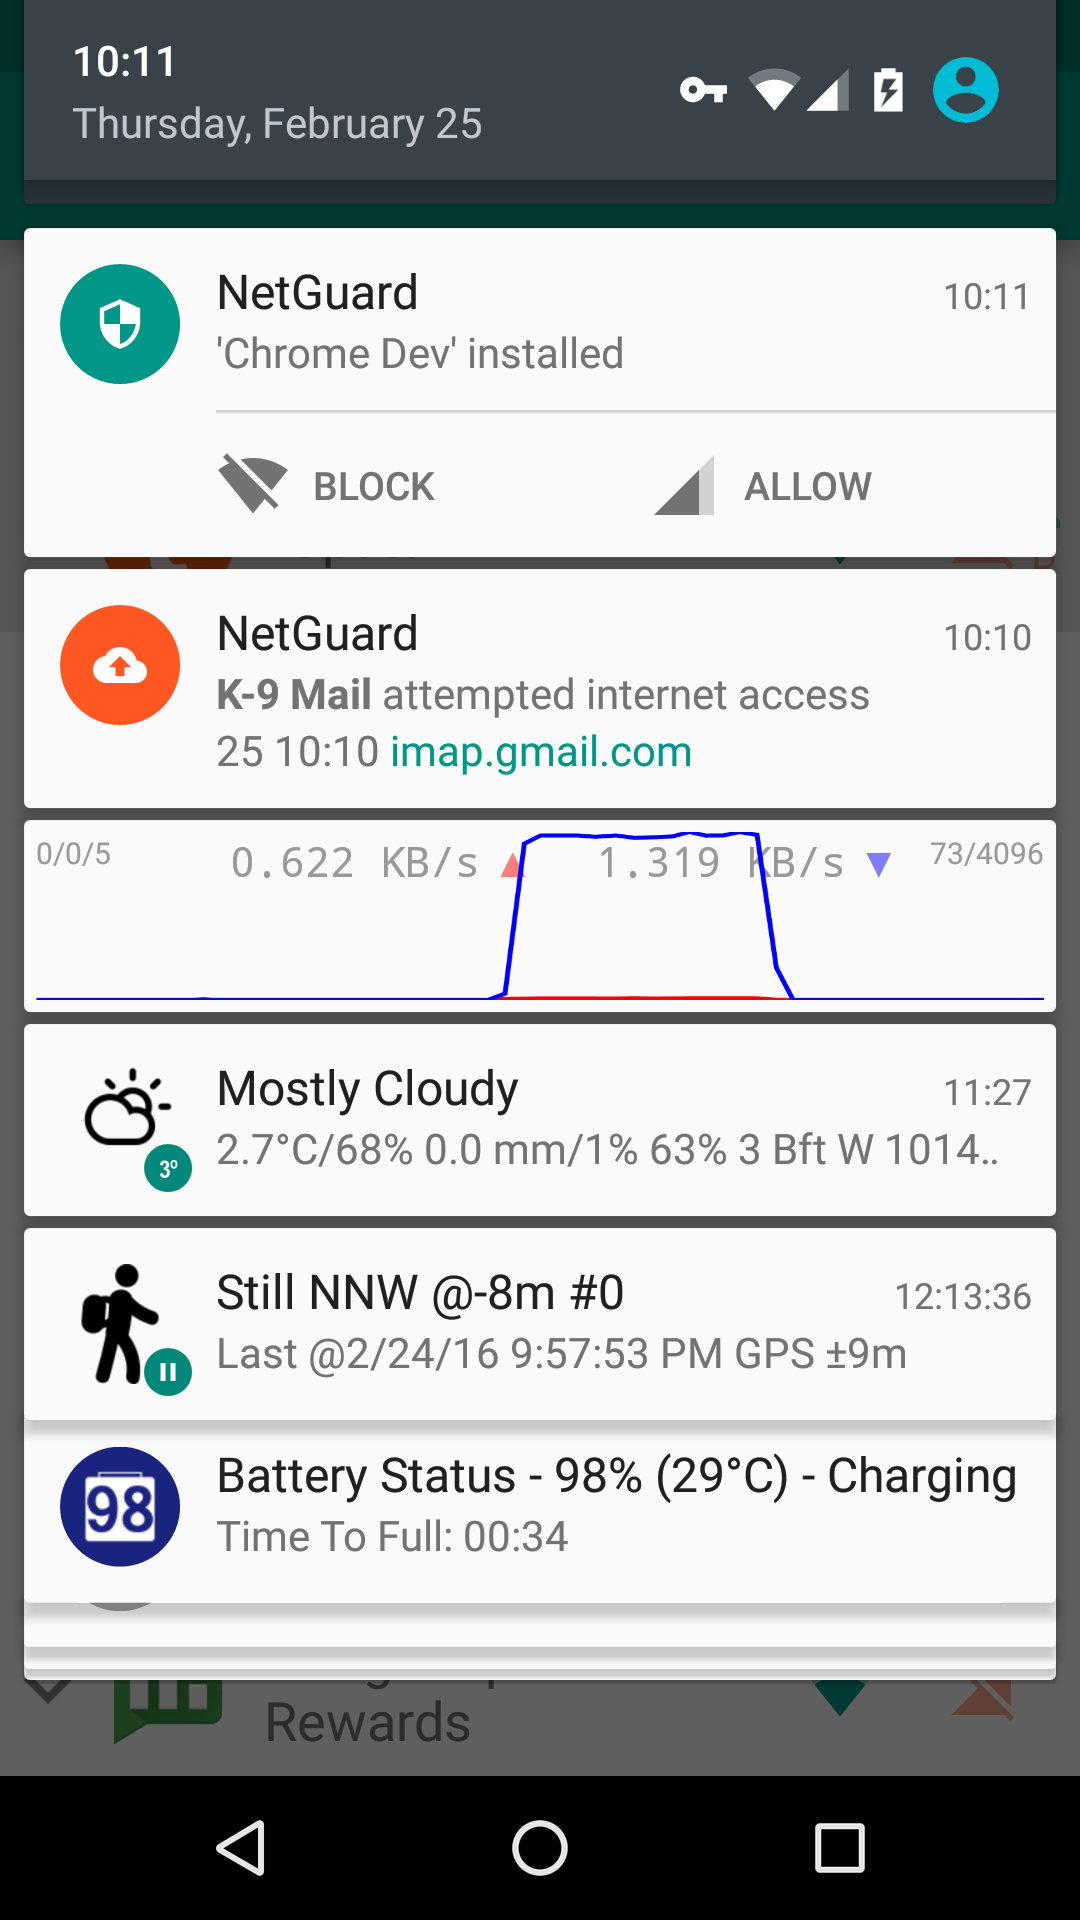 NetGuard active notification.